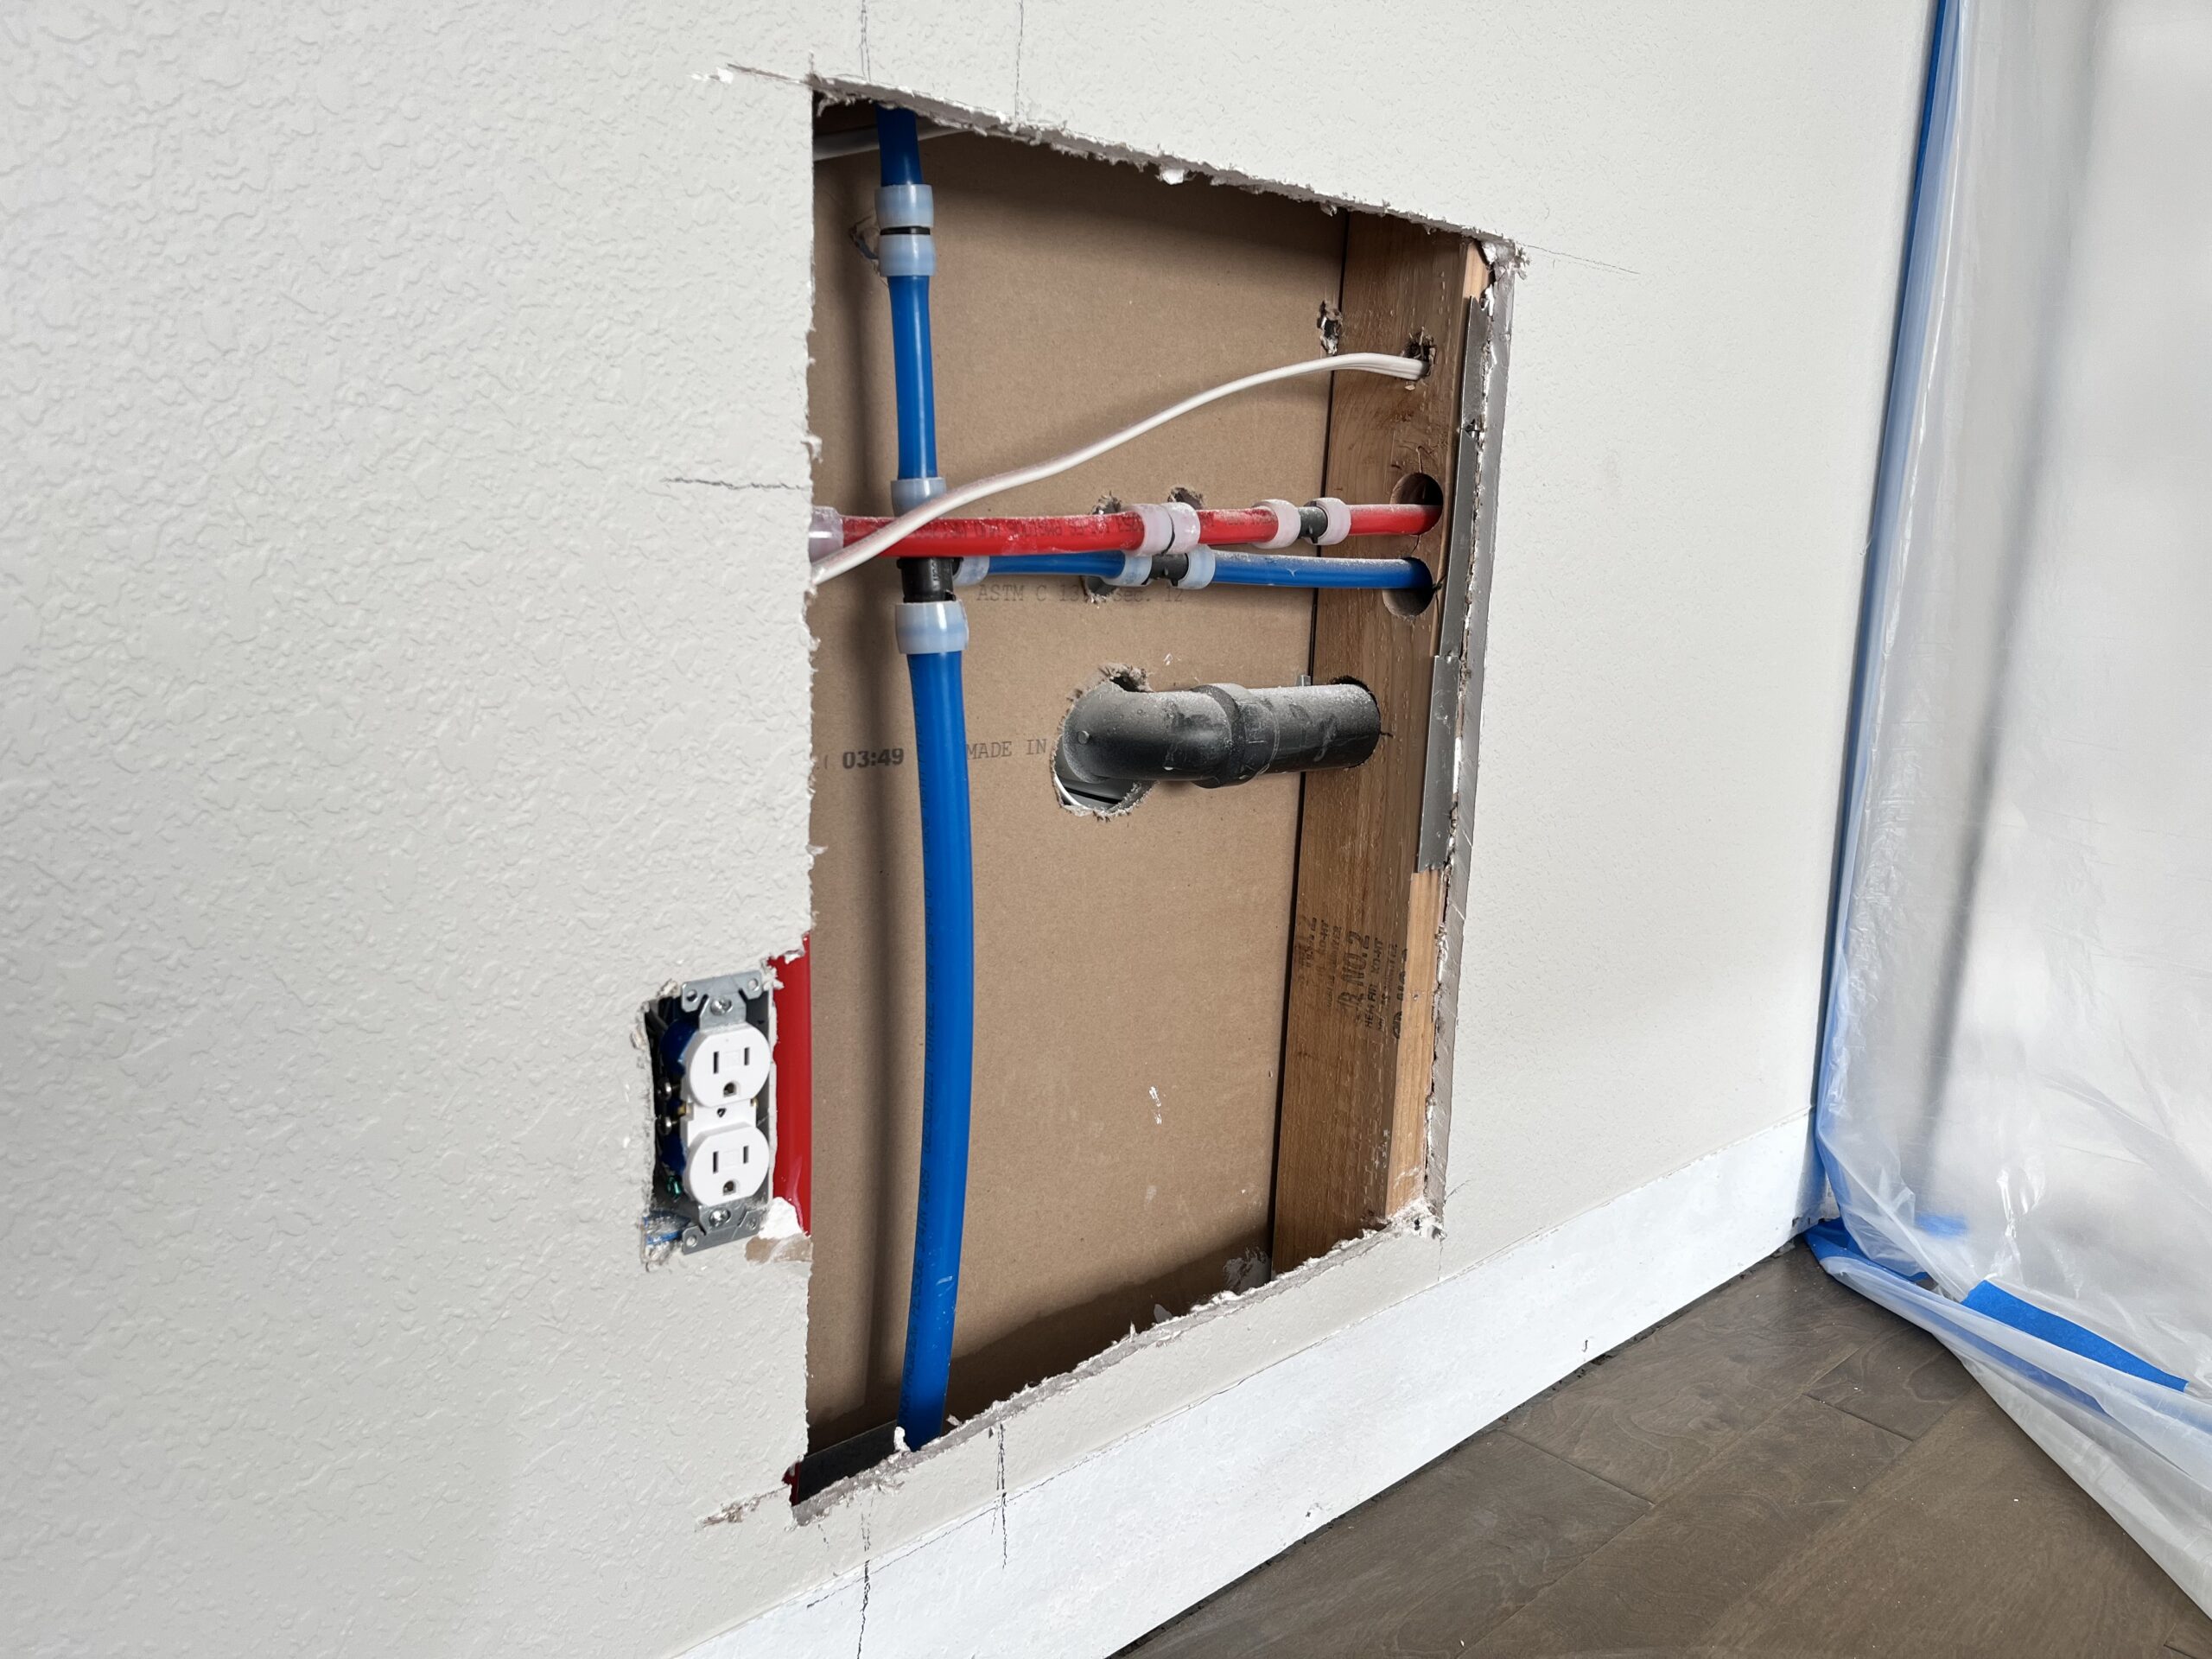 Drywall repair from plumbing issue